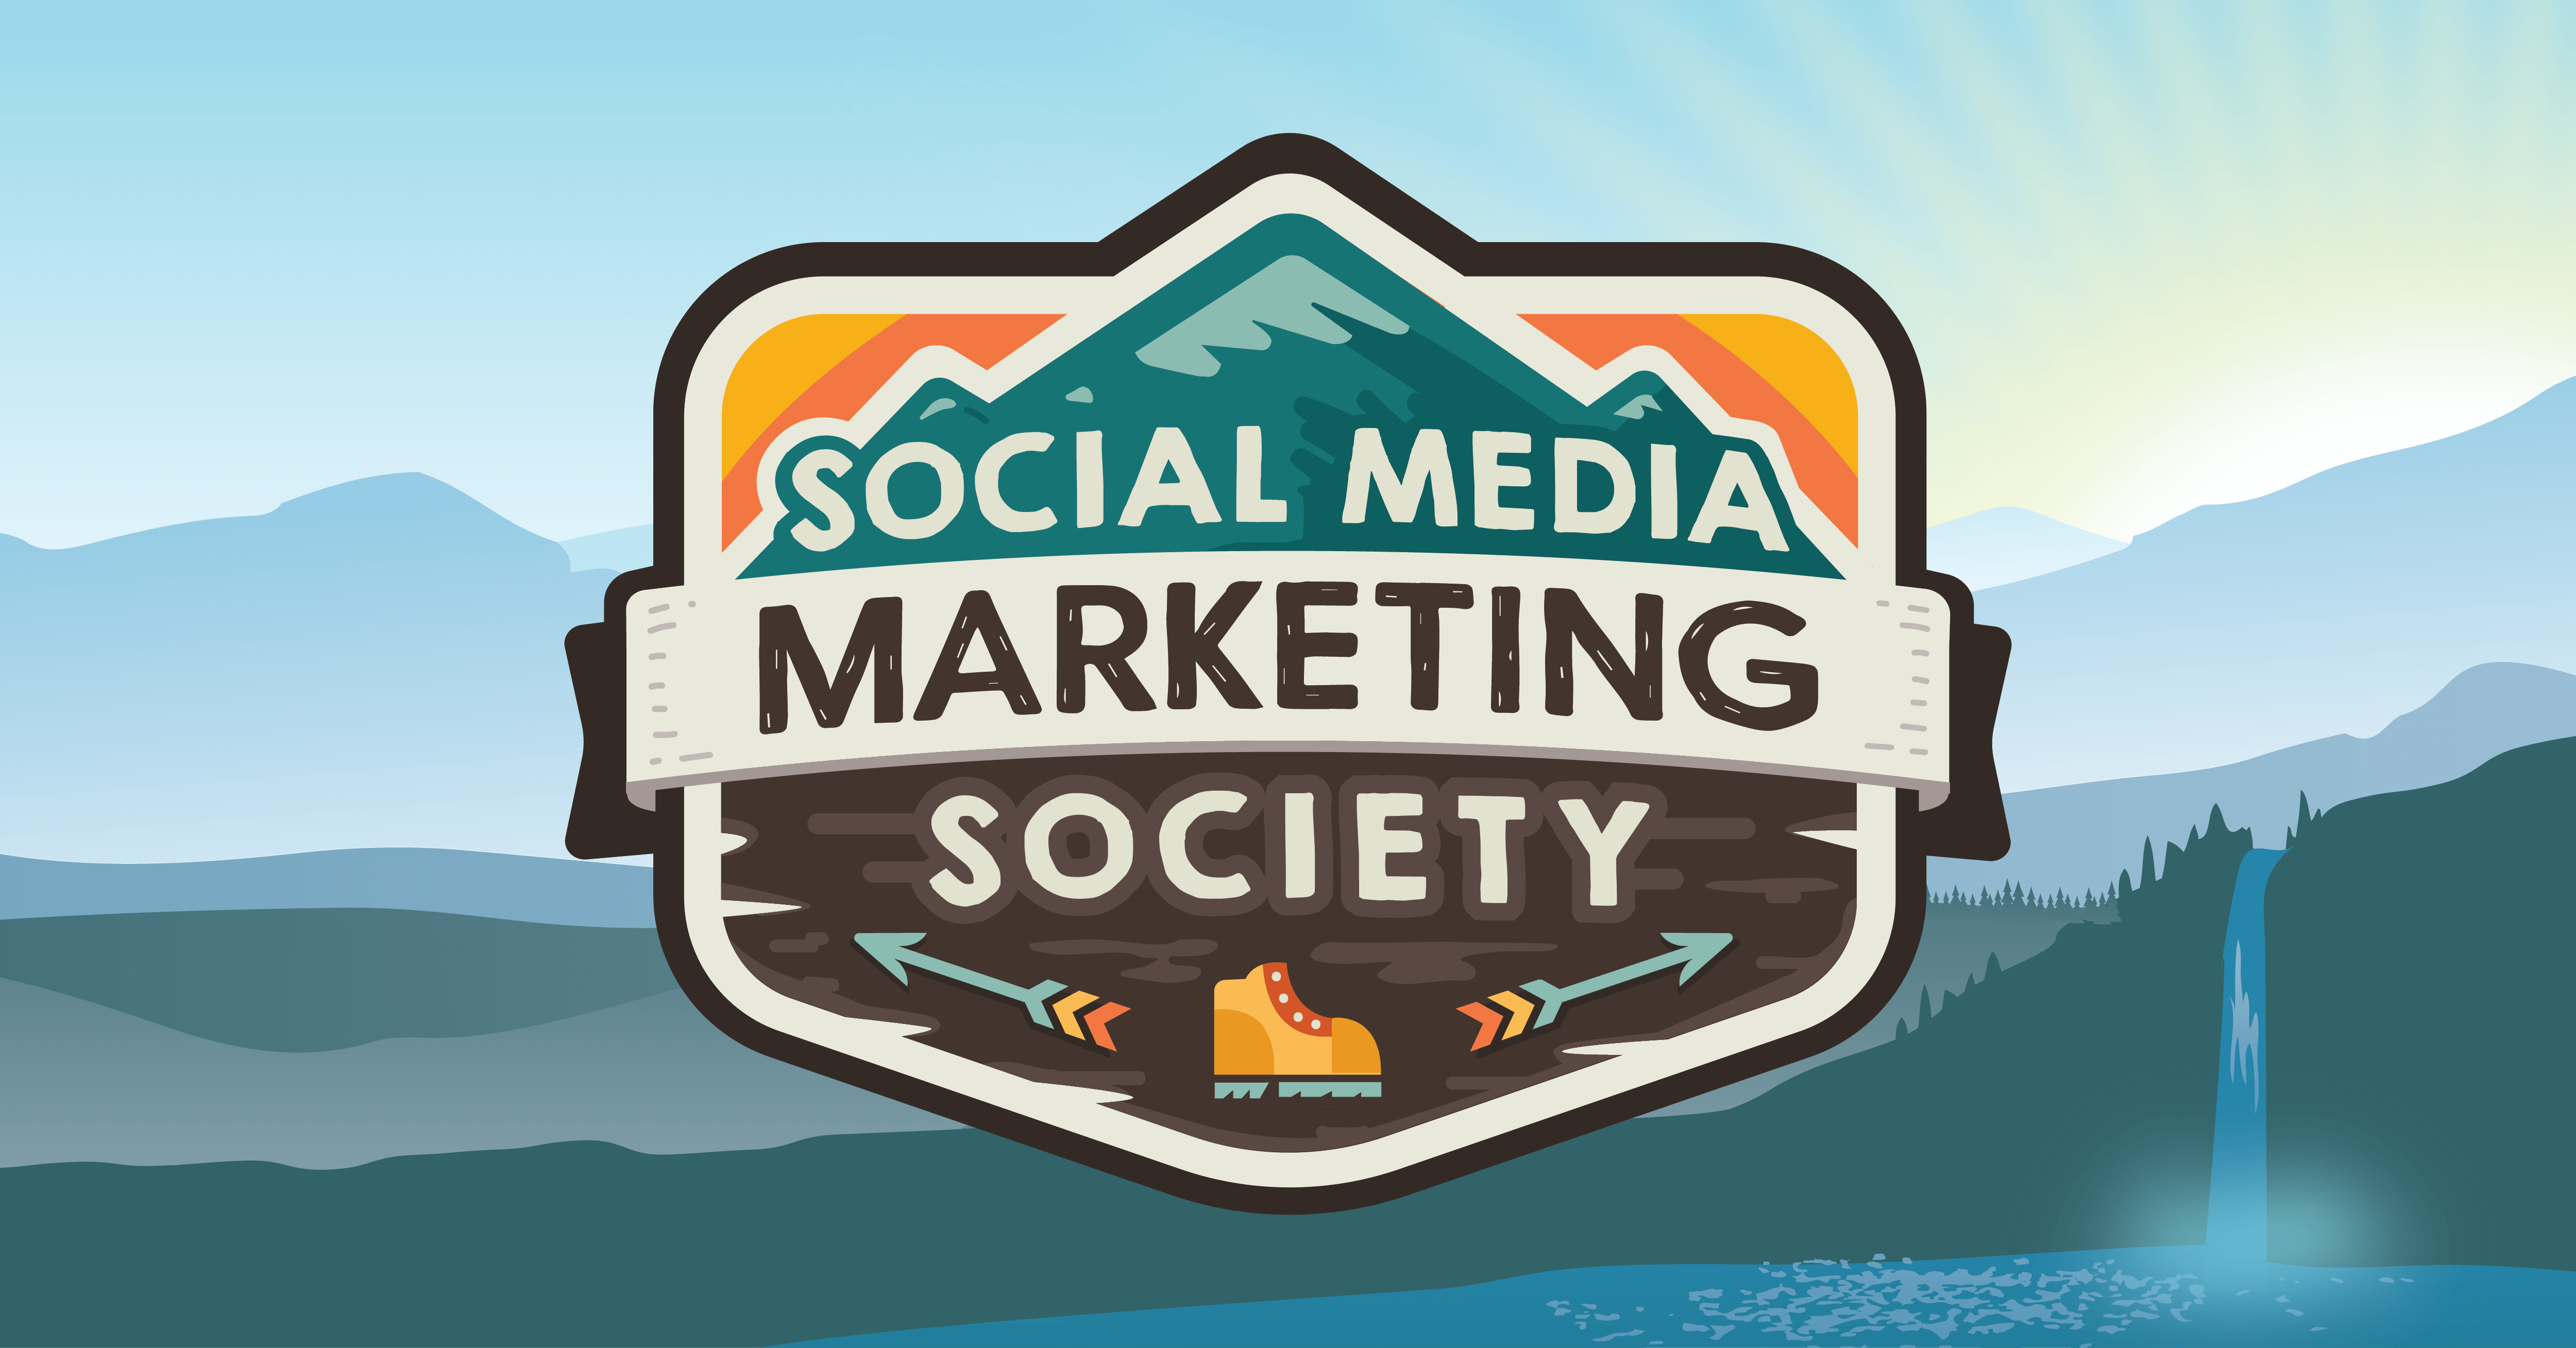 Social Media Marketing Society: Welcome fellow marketer!